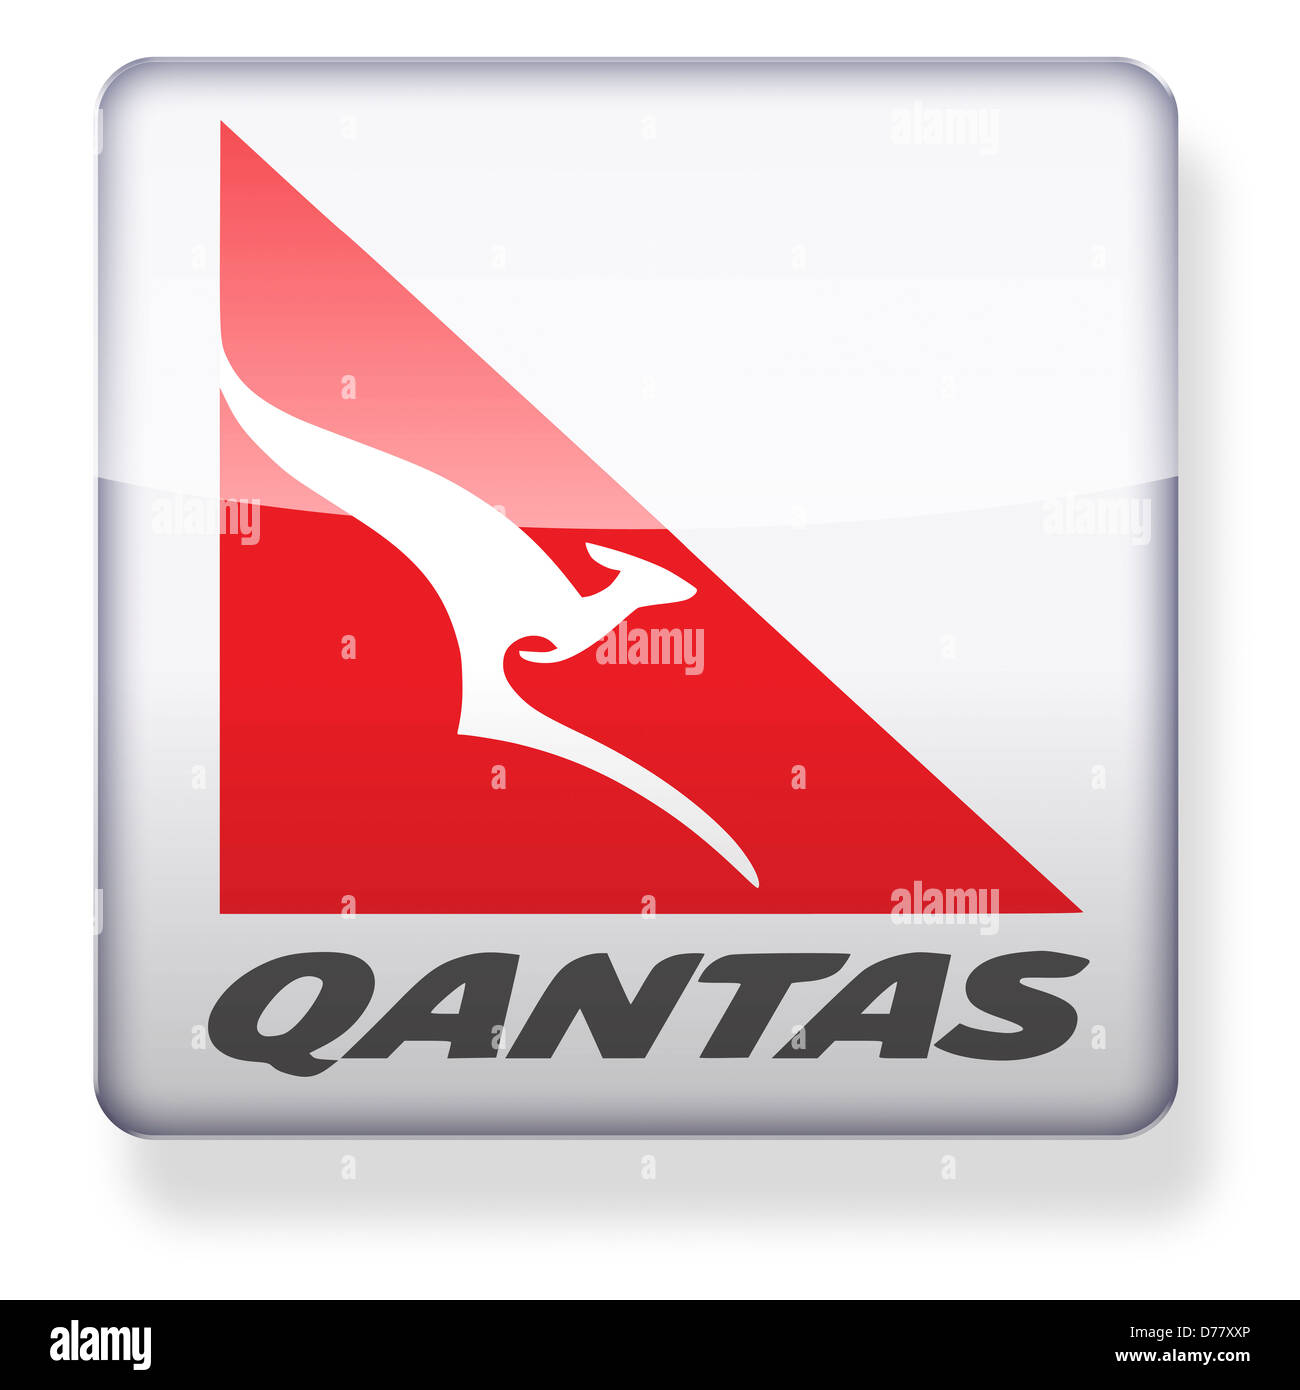 Qantas logo as an app icon. Clipping path included. Stock Photo